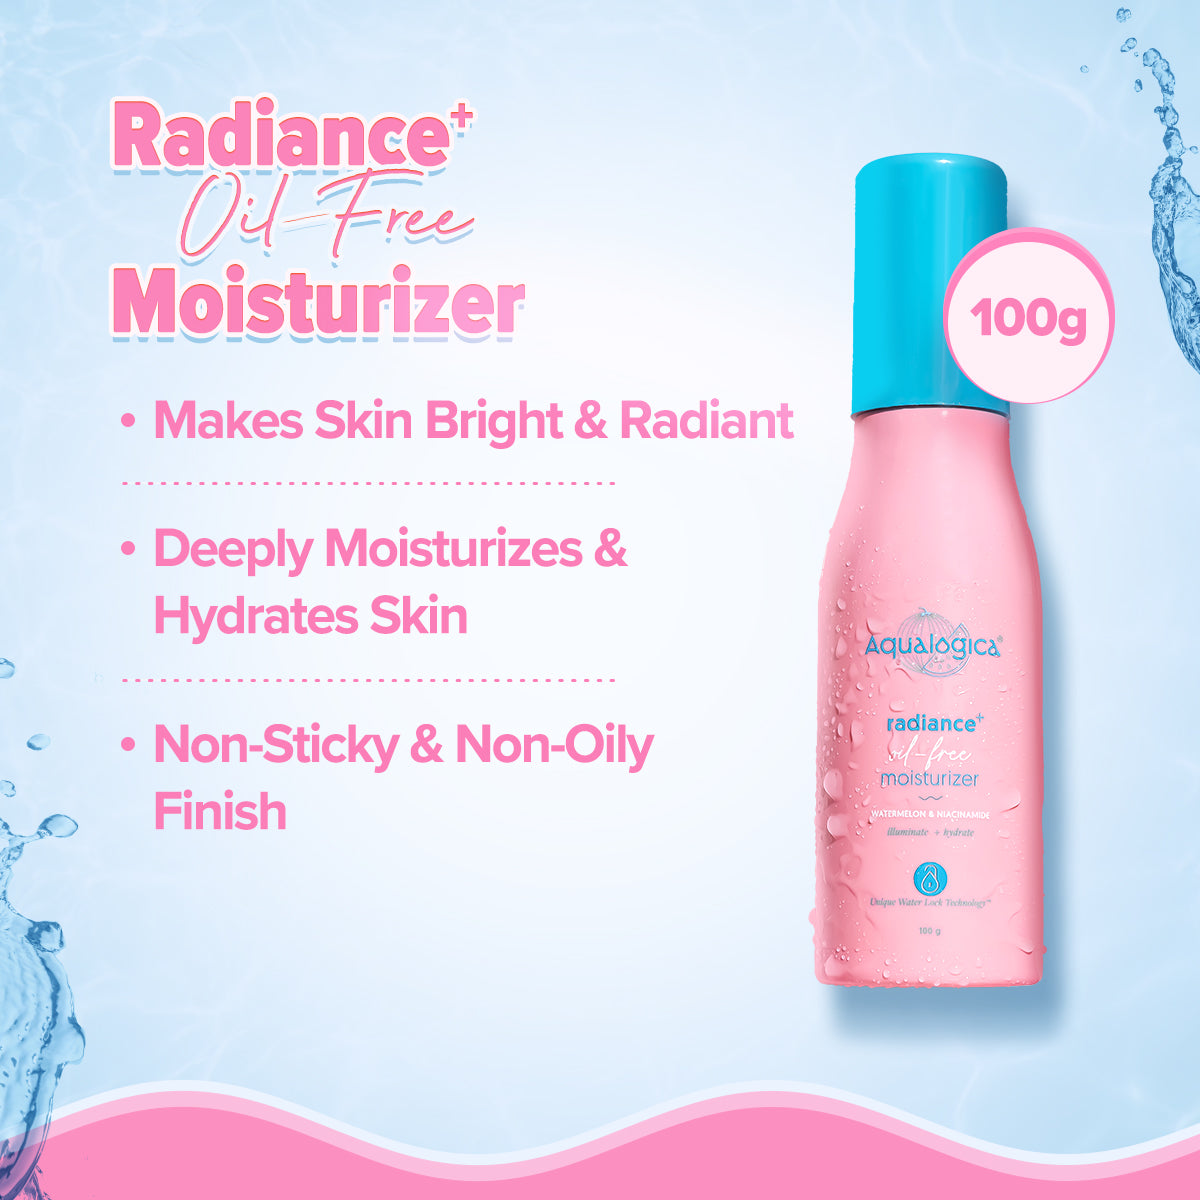 Radiance+ Protect & Glow Duo (Radiance+ Oil Free Moisturizer -  100g, Radiance+ Dewy Sunscreen - 50g)